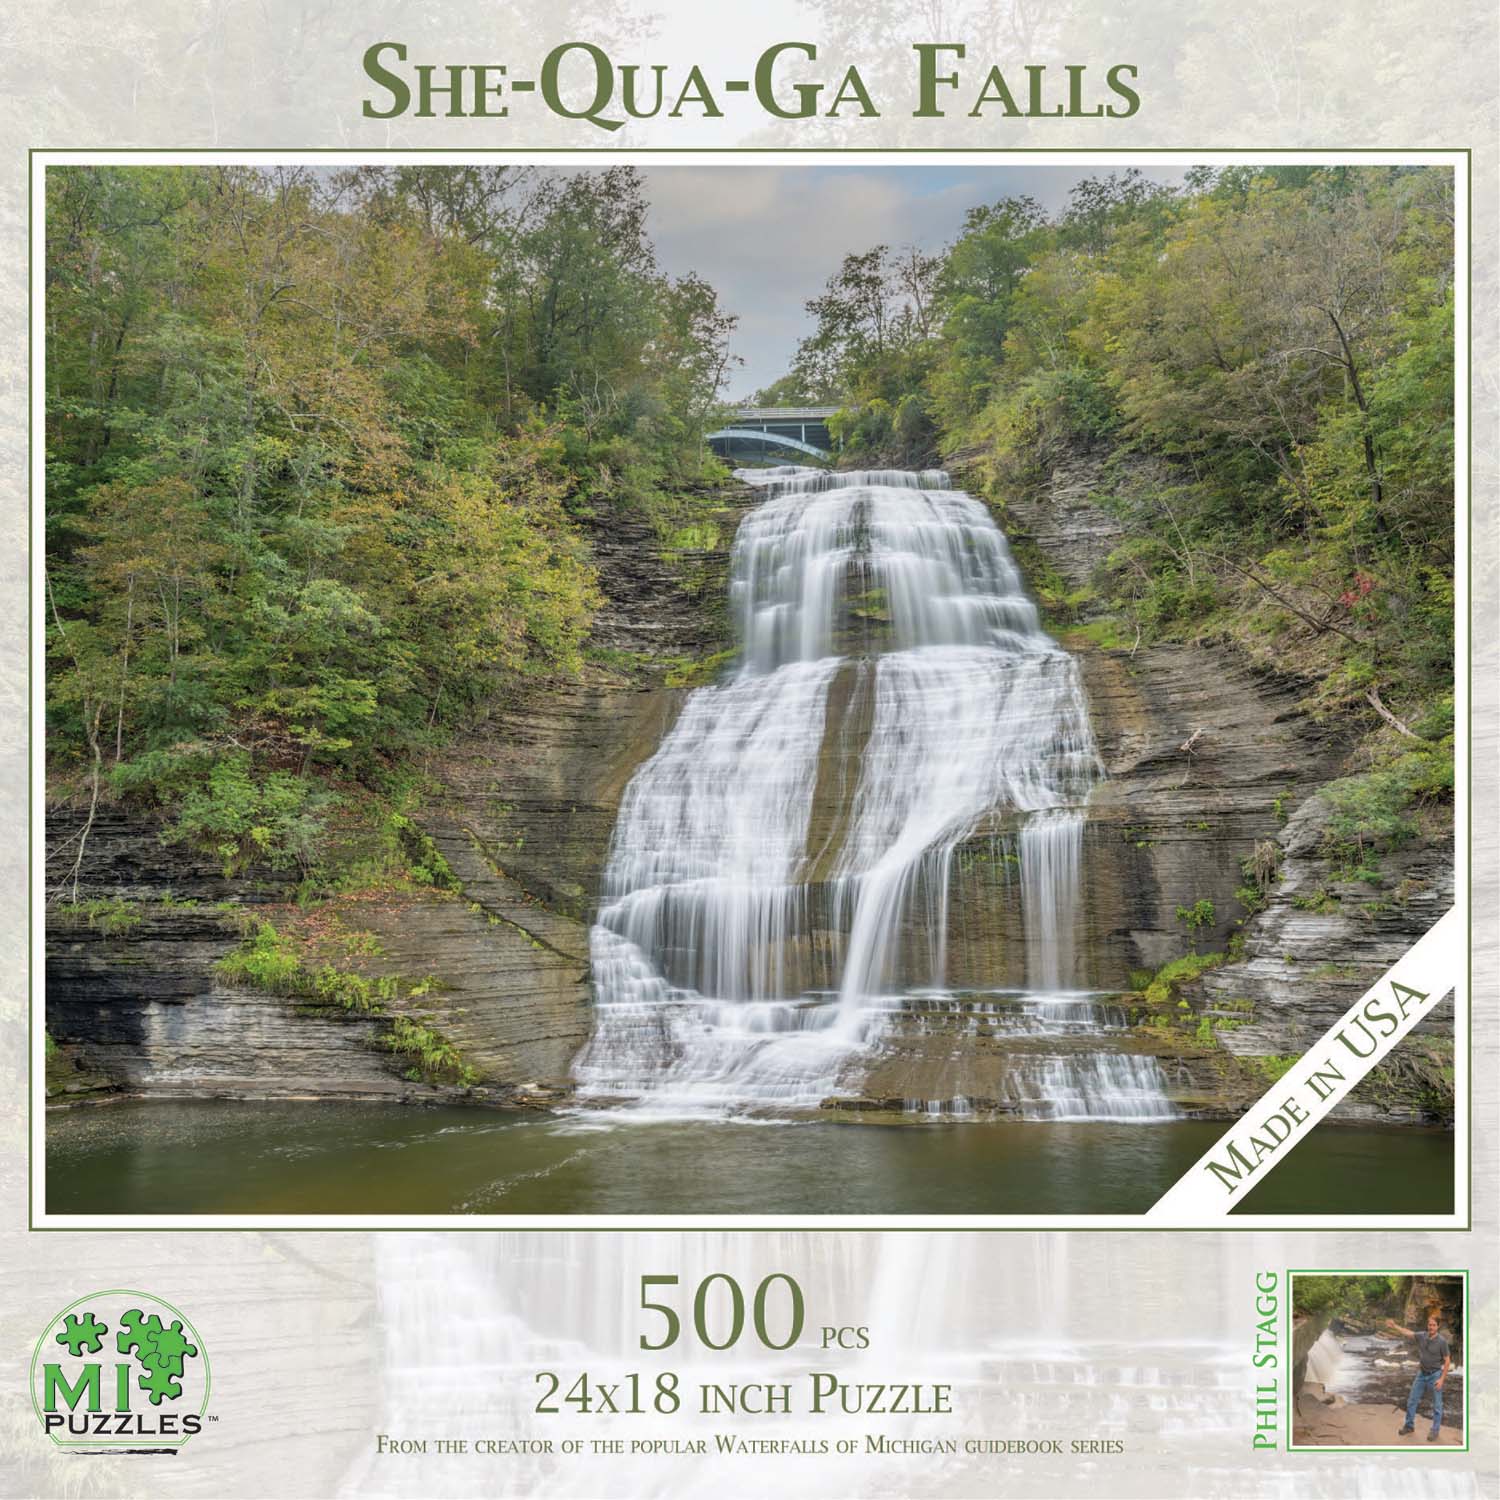 She-Qua-Ga Falls